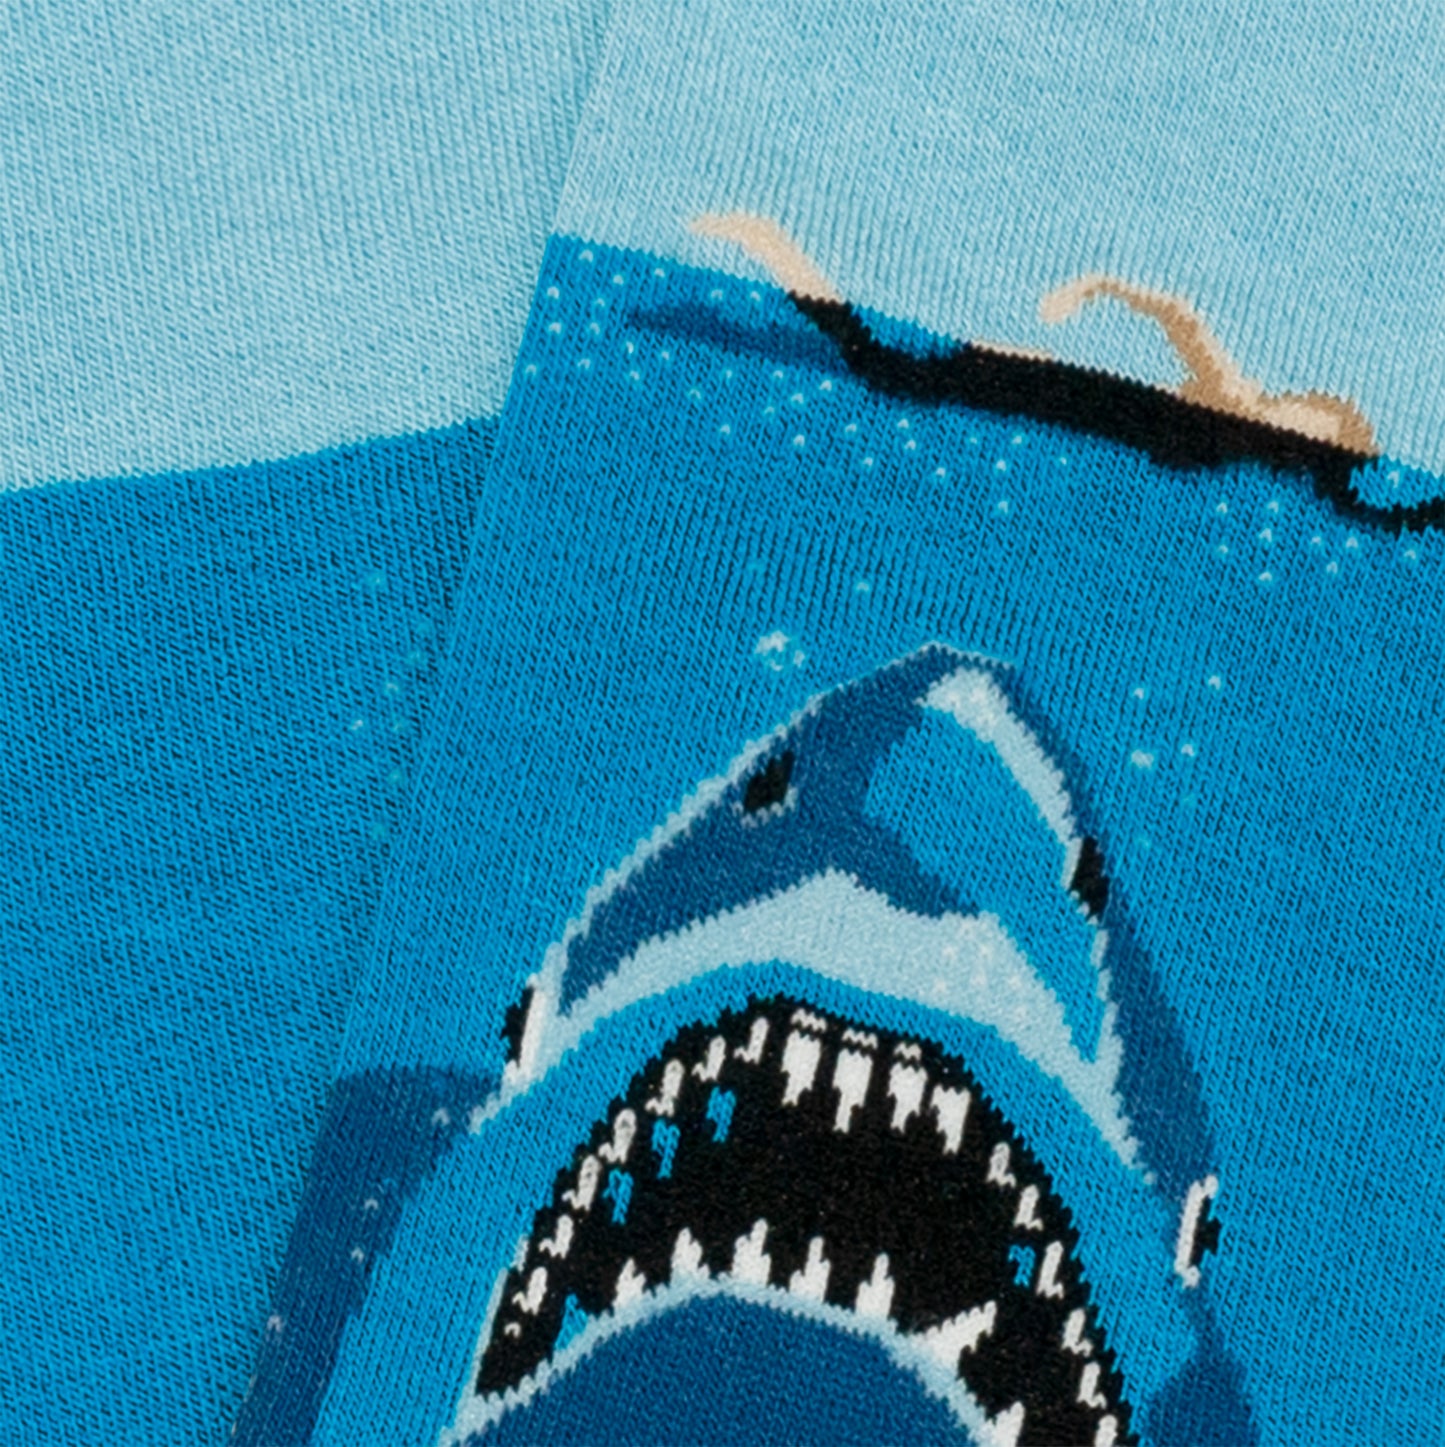 Jaws Shark Attack - Blue (3)